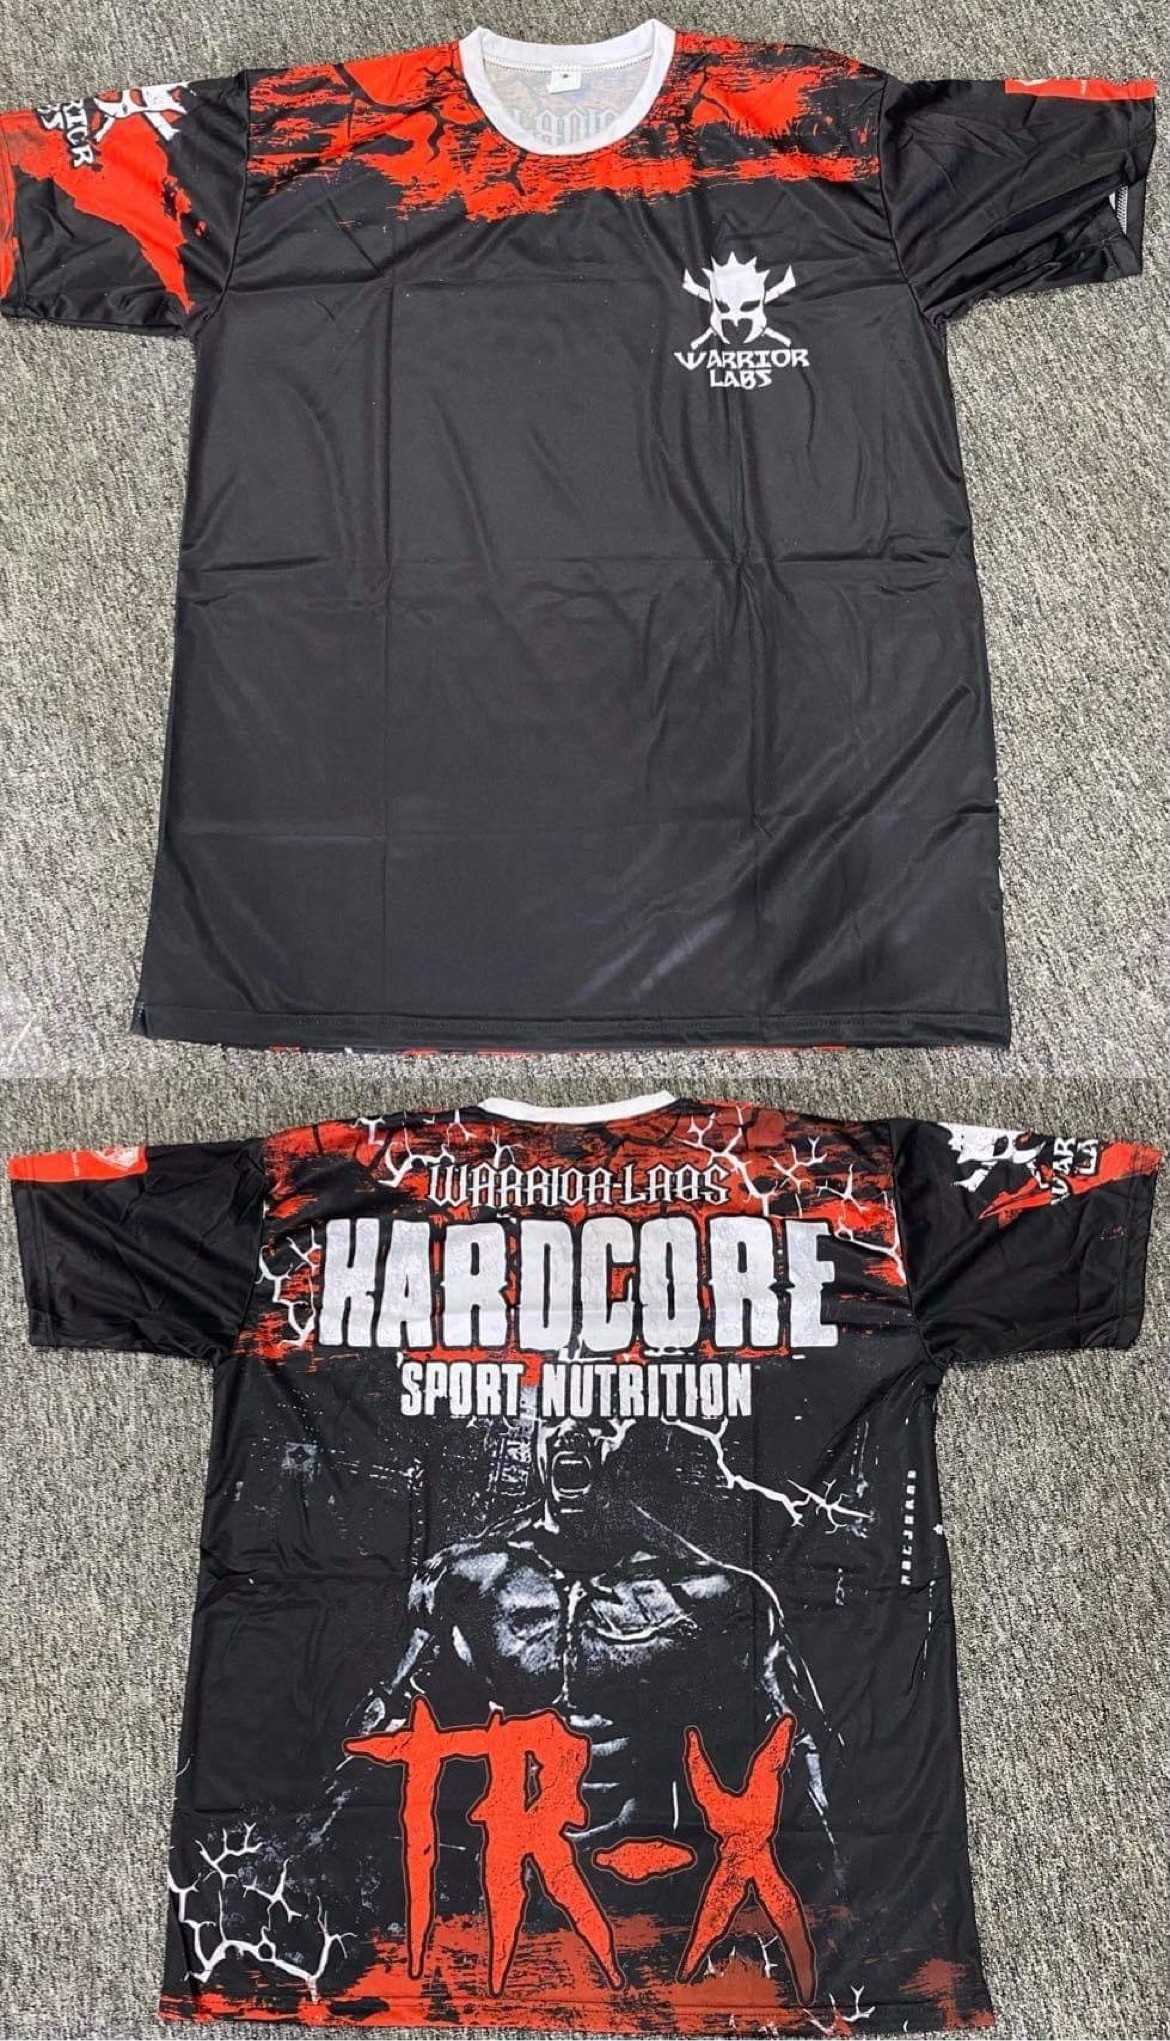 Warrior labs - Hardcore sport nutrition tričko